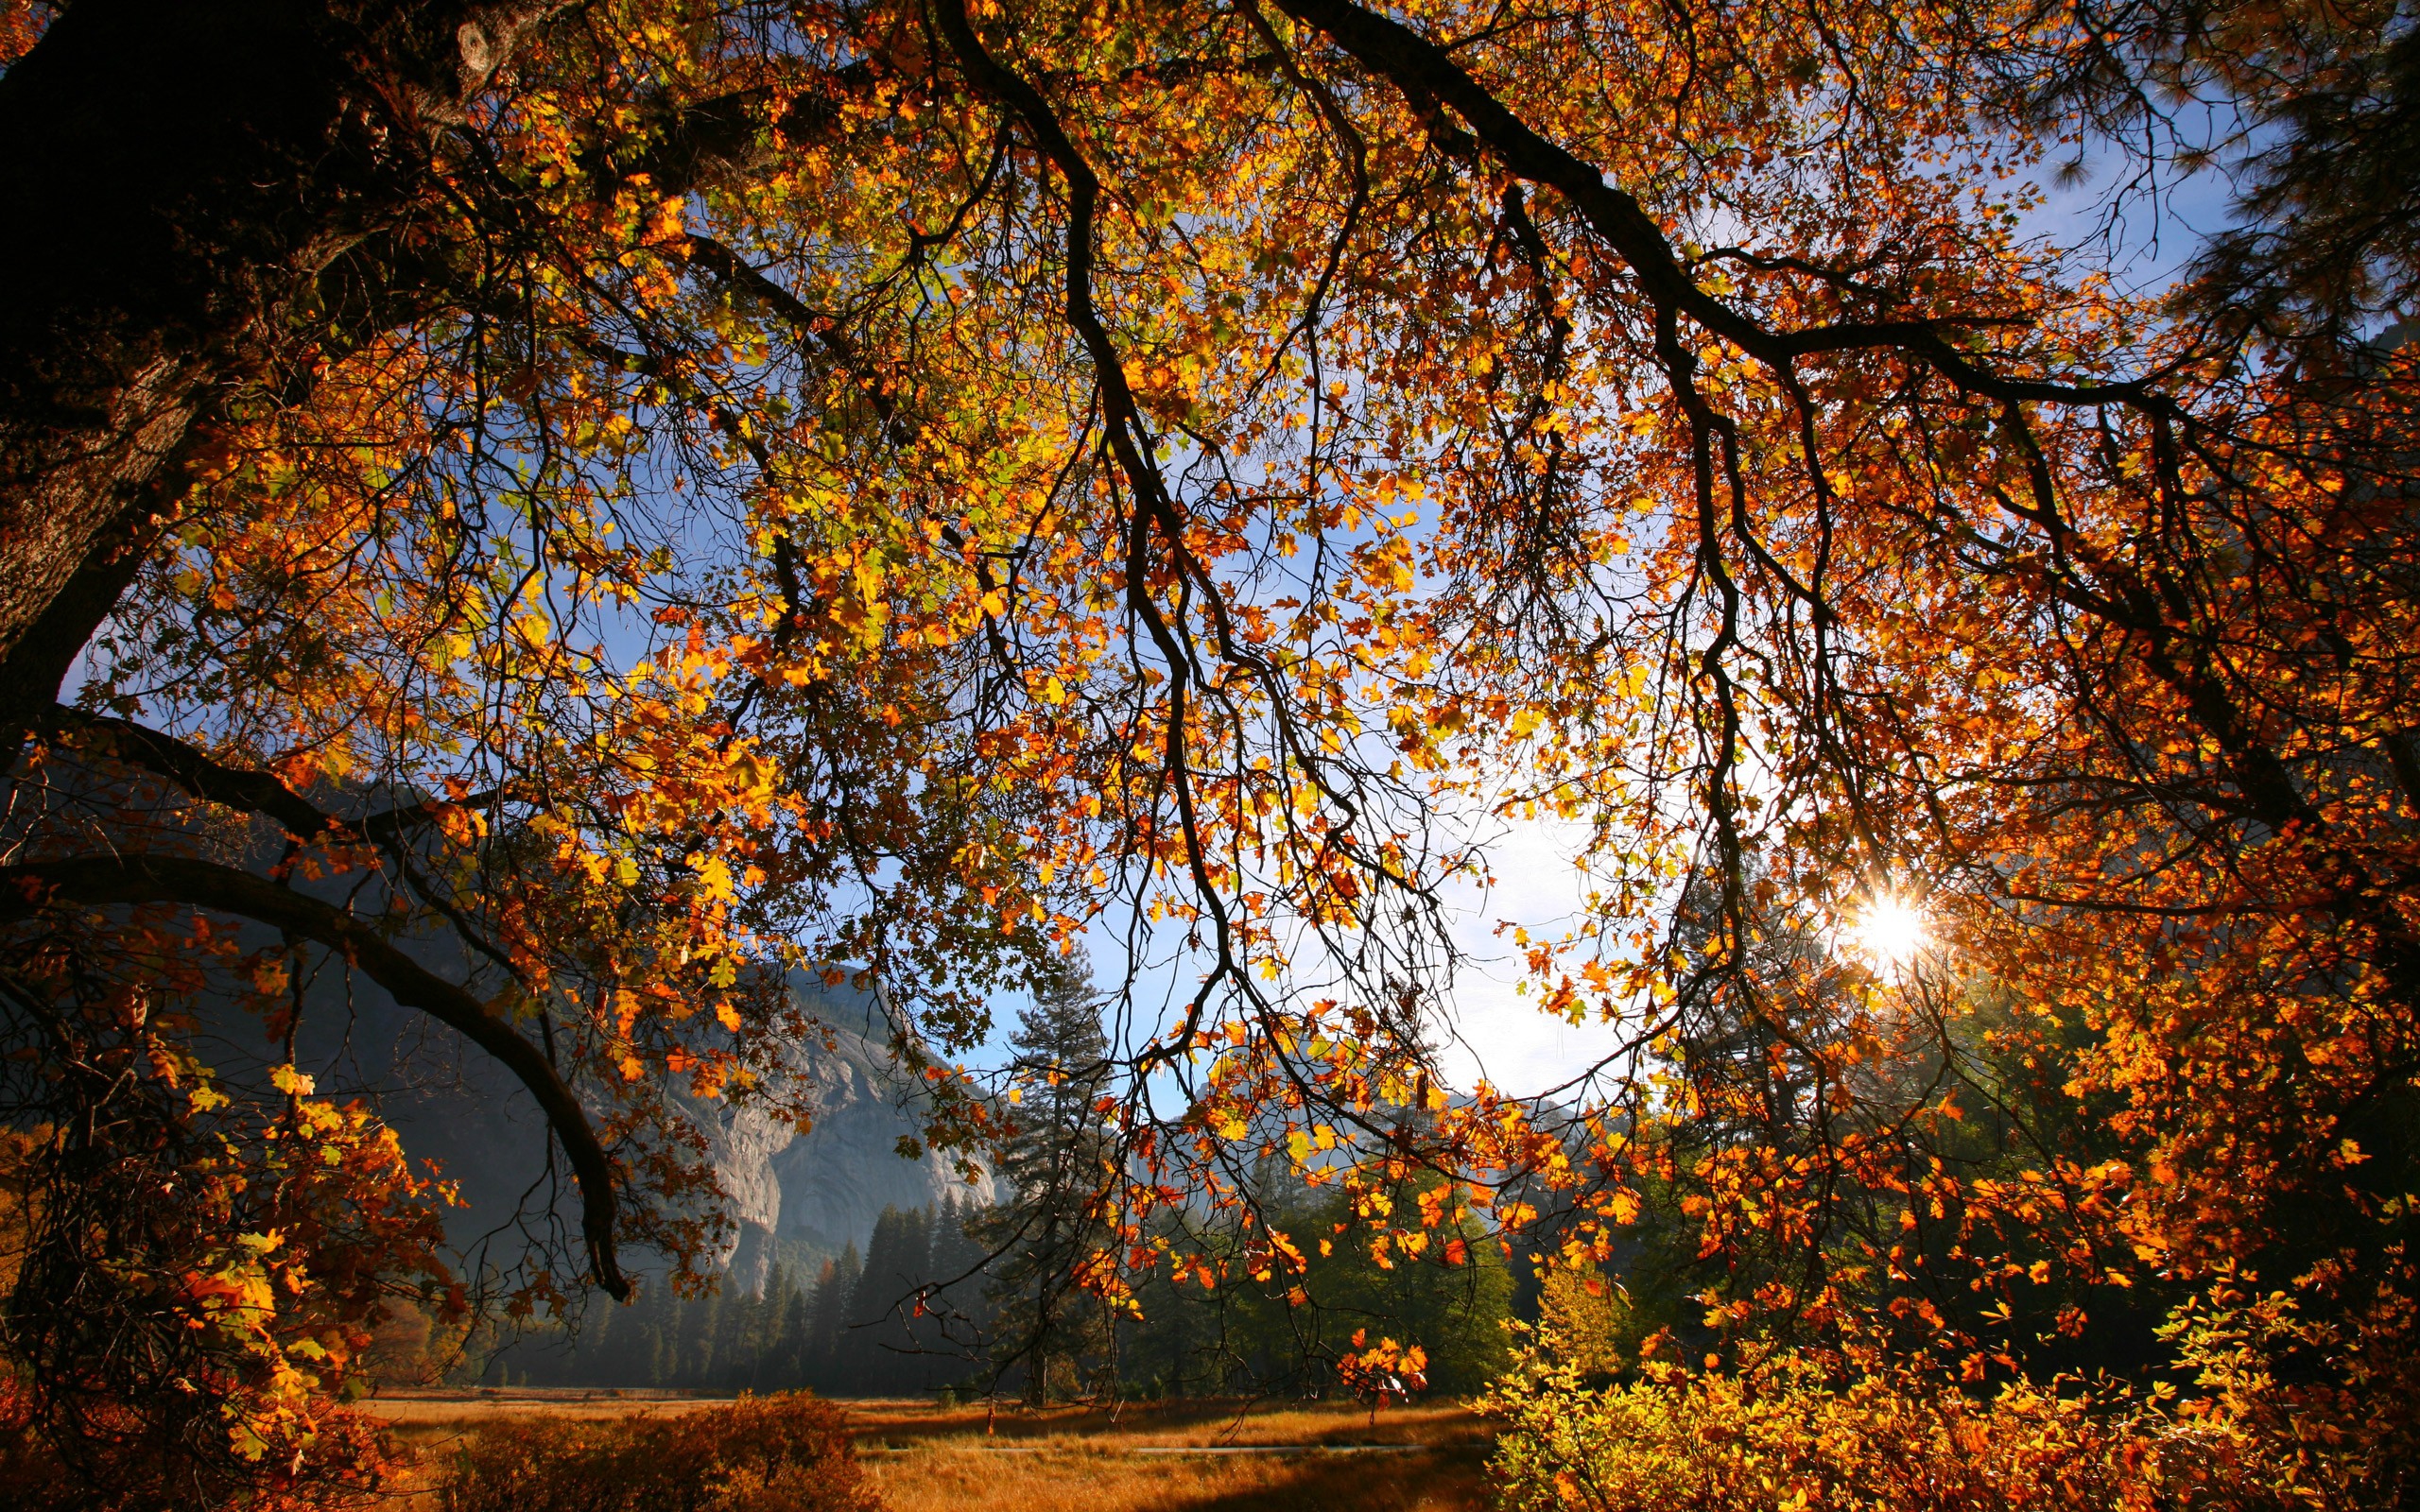 Scenic autumn landscape: Vibrant fall foliage and natural beauty.